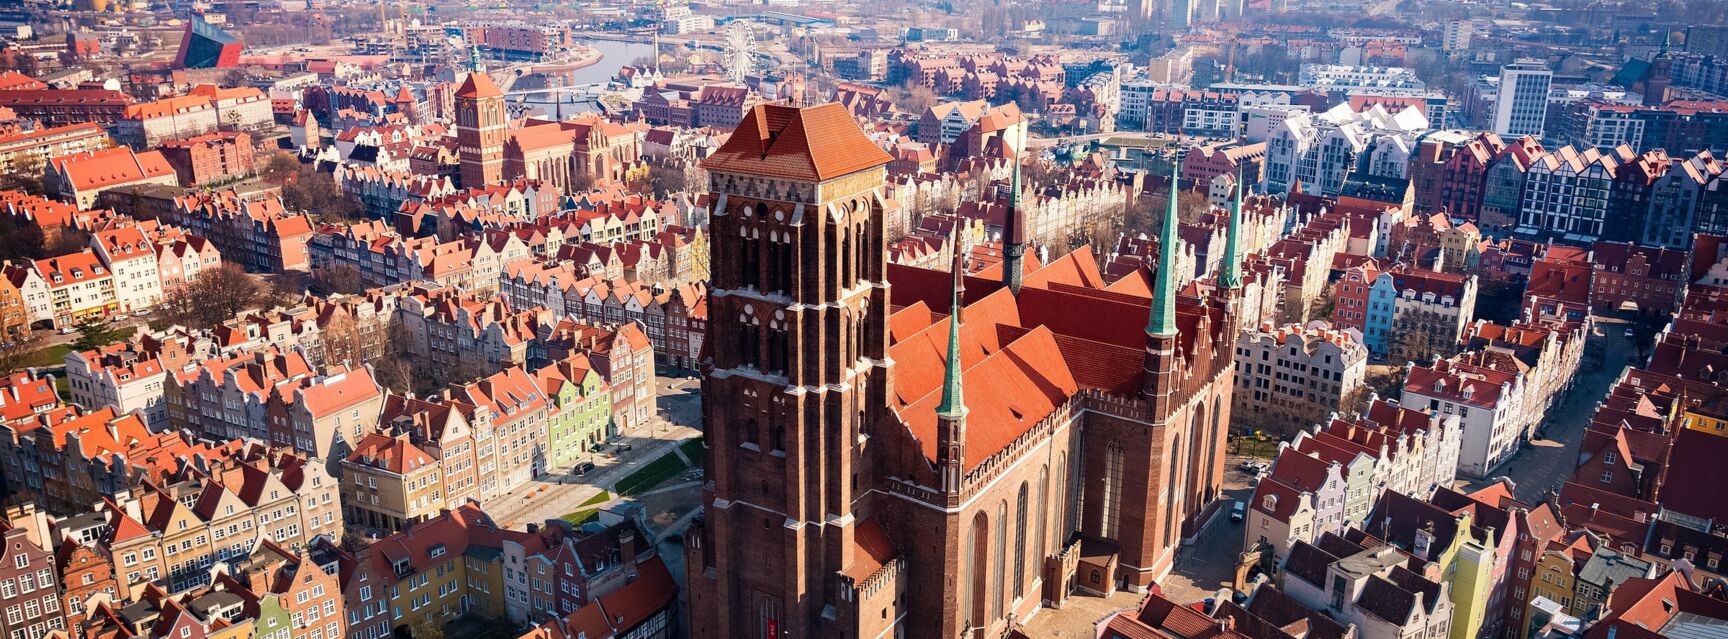 St. Marien-Basilika ©Visit Gdansk